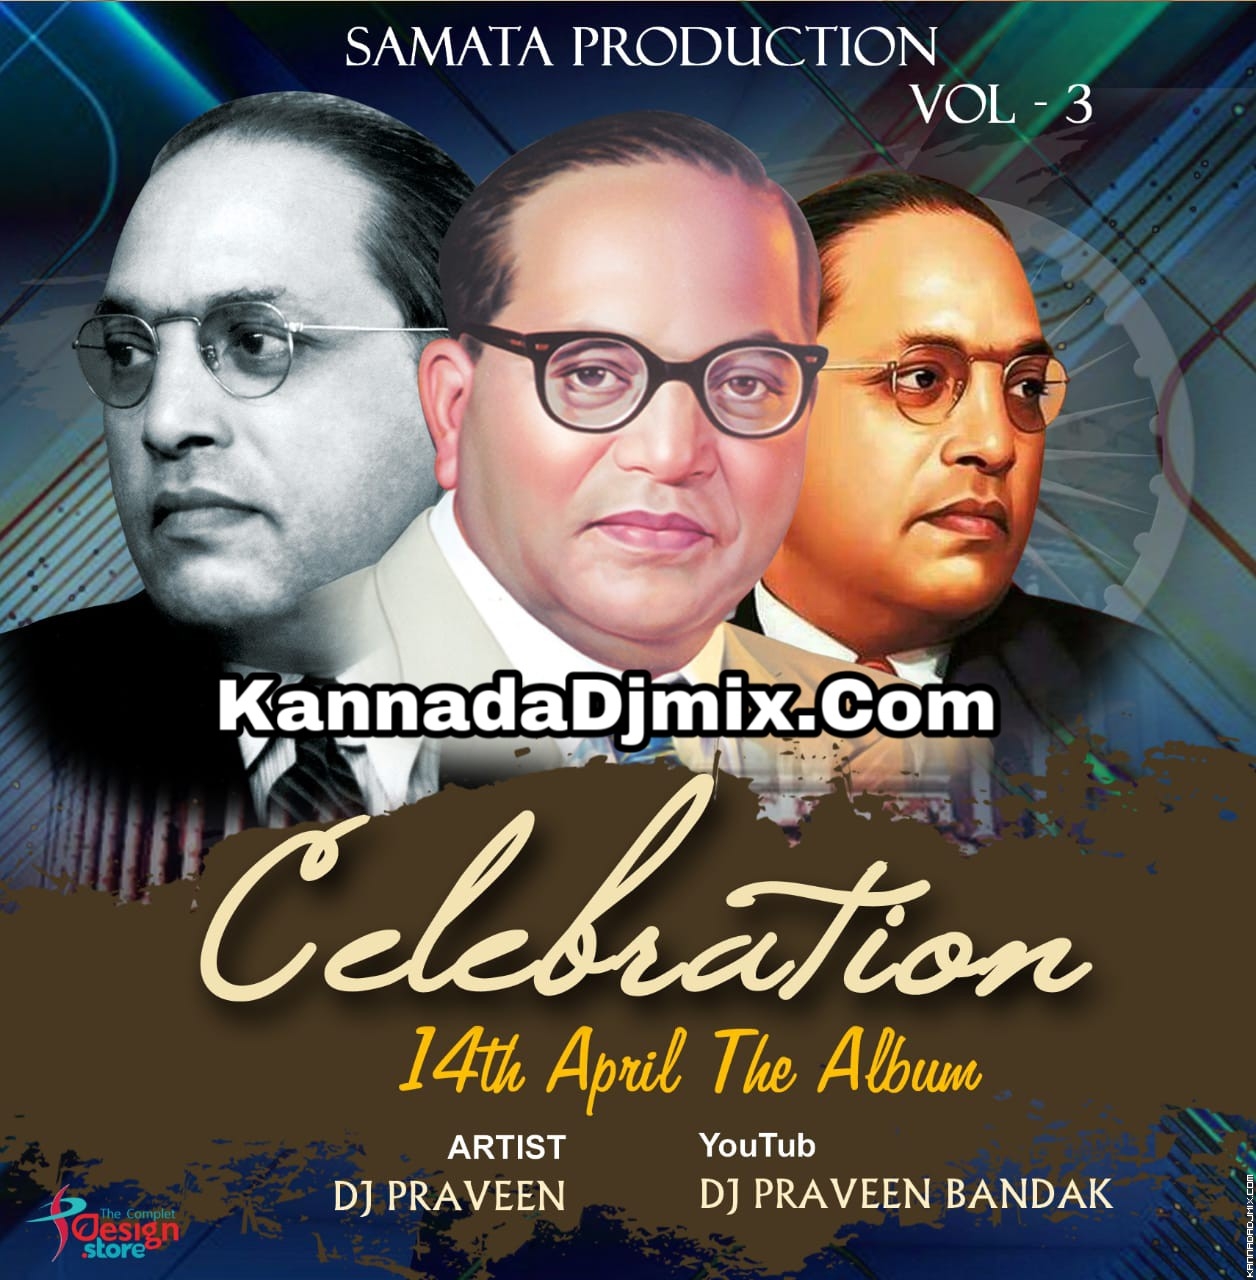 Bhimacha Gana Dj La EDM VS Dhamal Mix Samata Producation.mp3